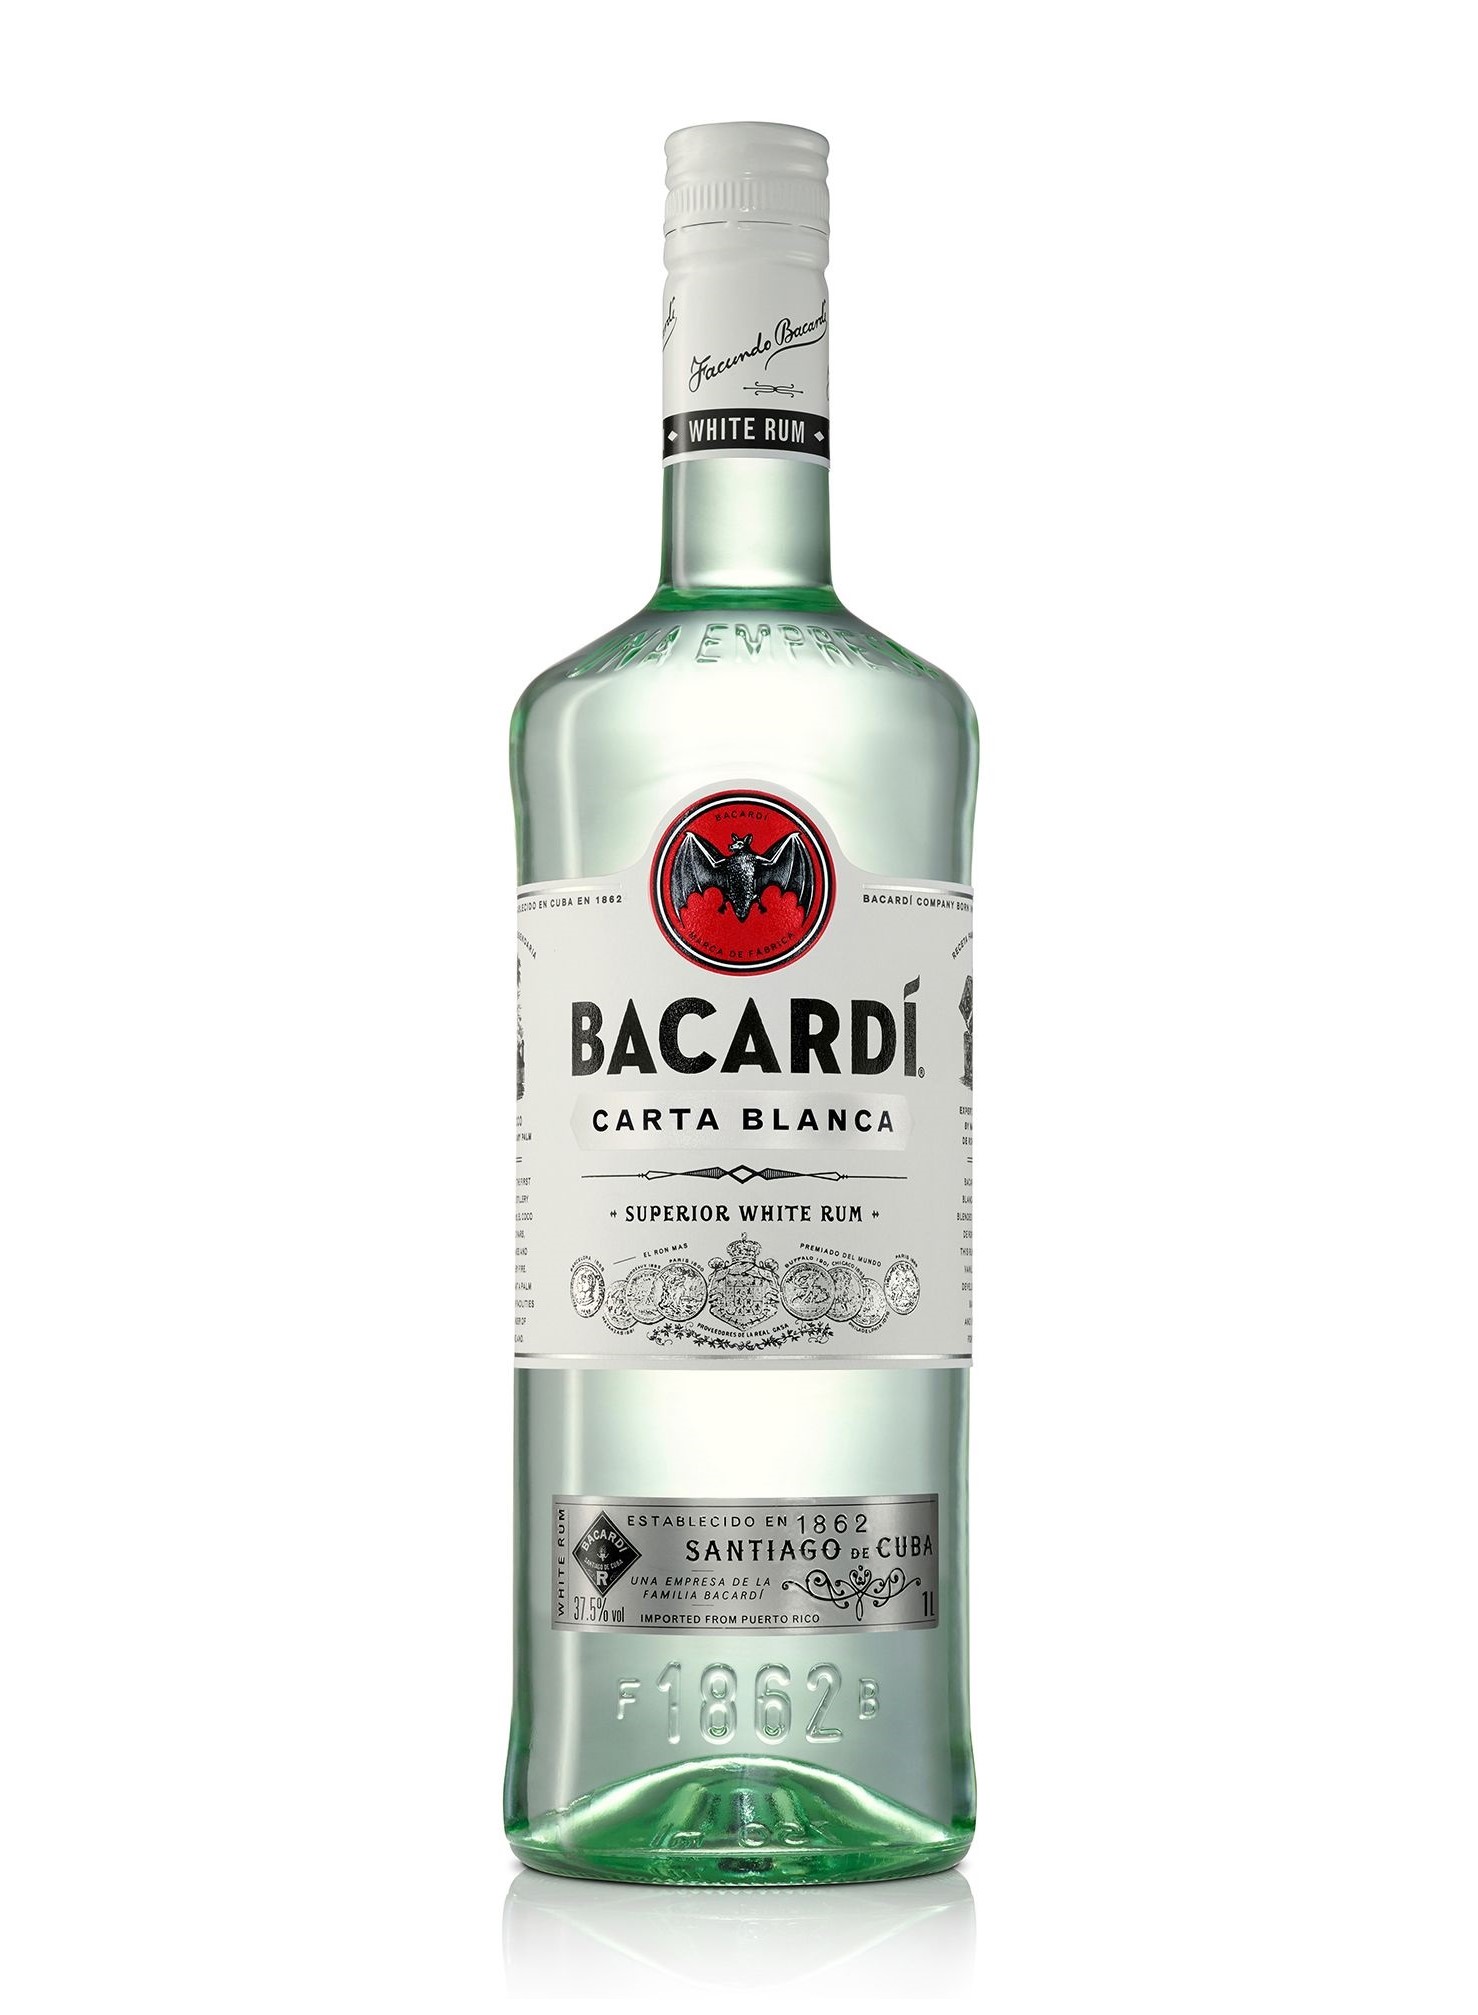 Bacardi Carta Blanca white rum 37.5% 1L